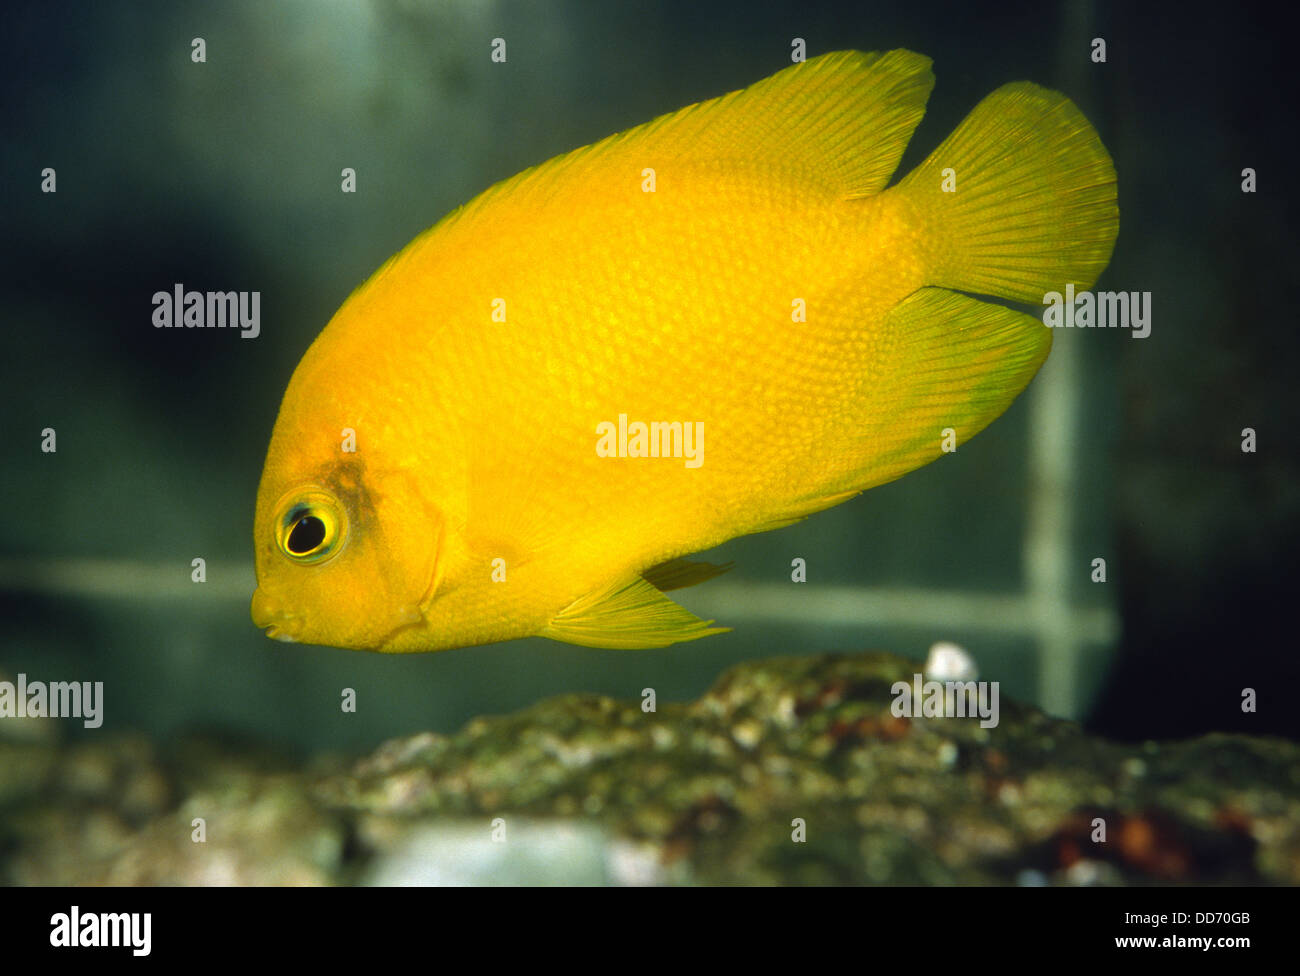 Yellow Angelfish, Centropyge heraldi, Pamacanthidae, Pacific Ocean, Stock Photo